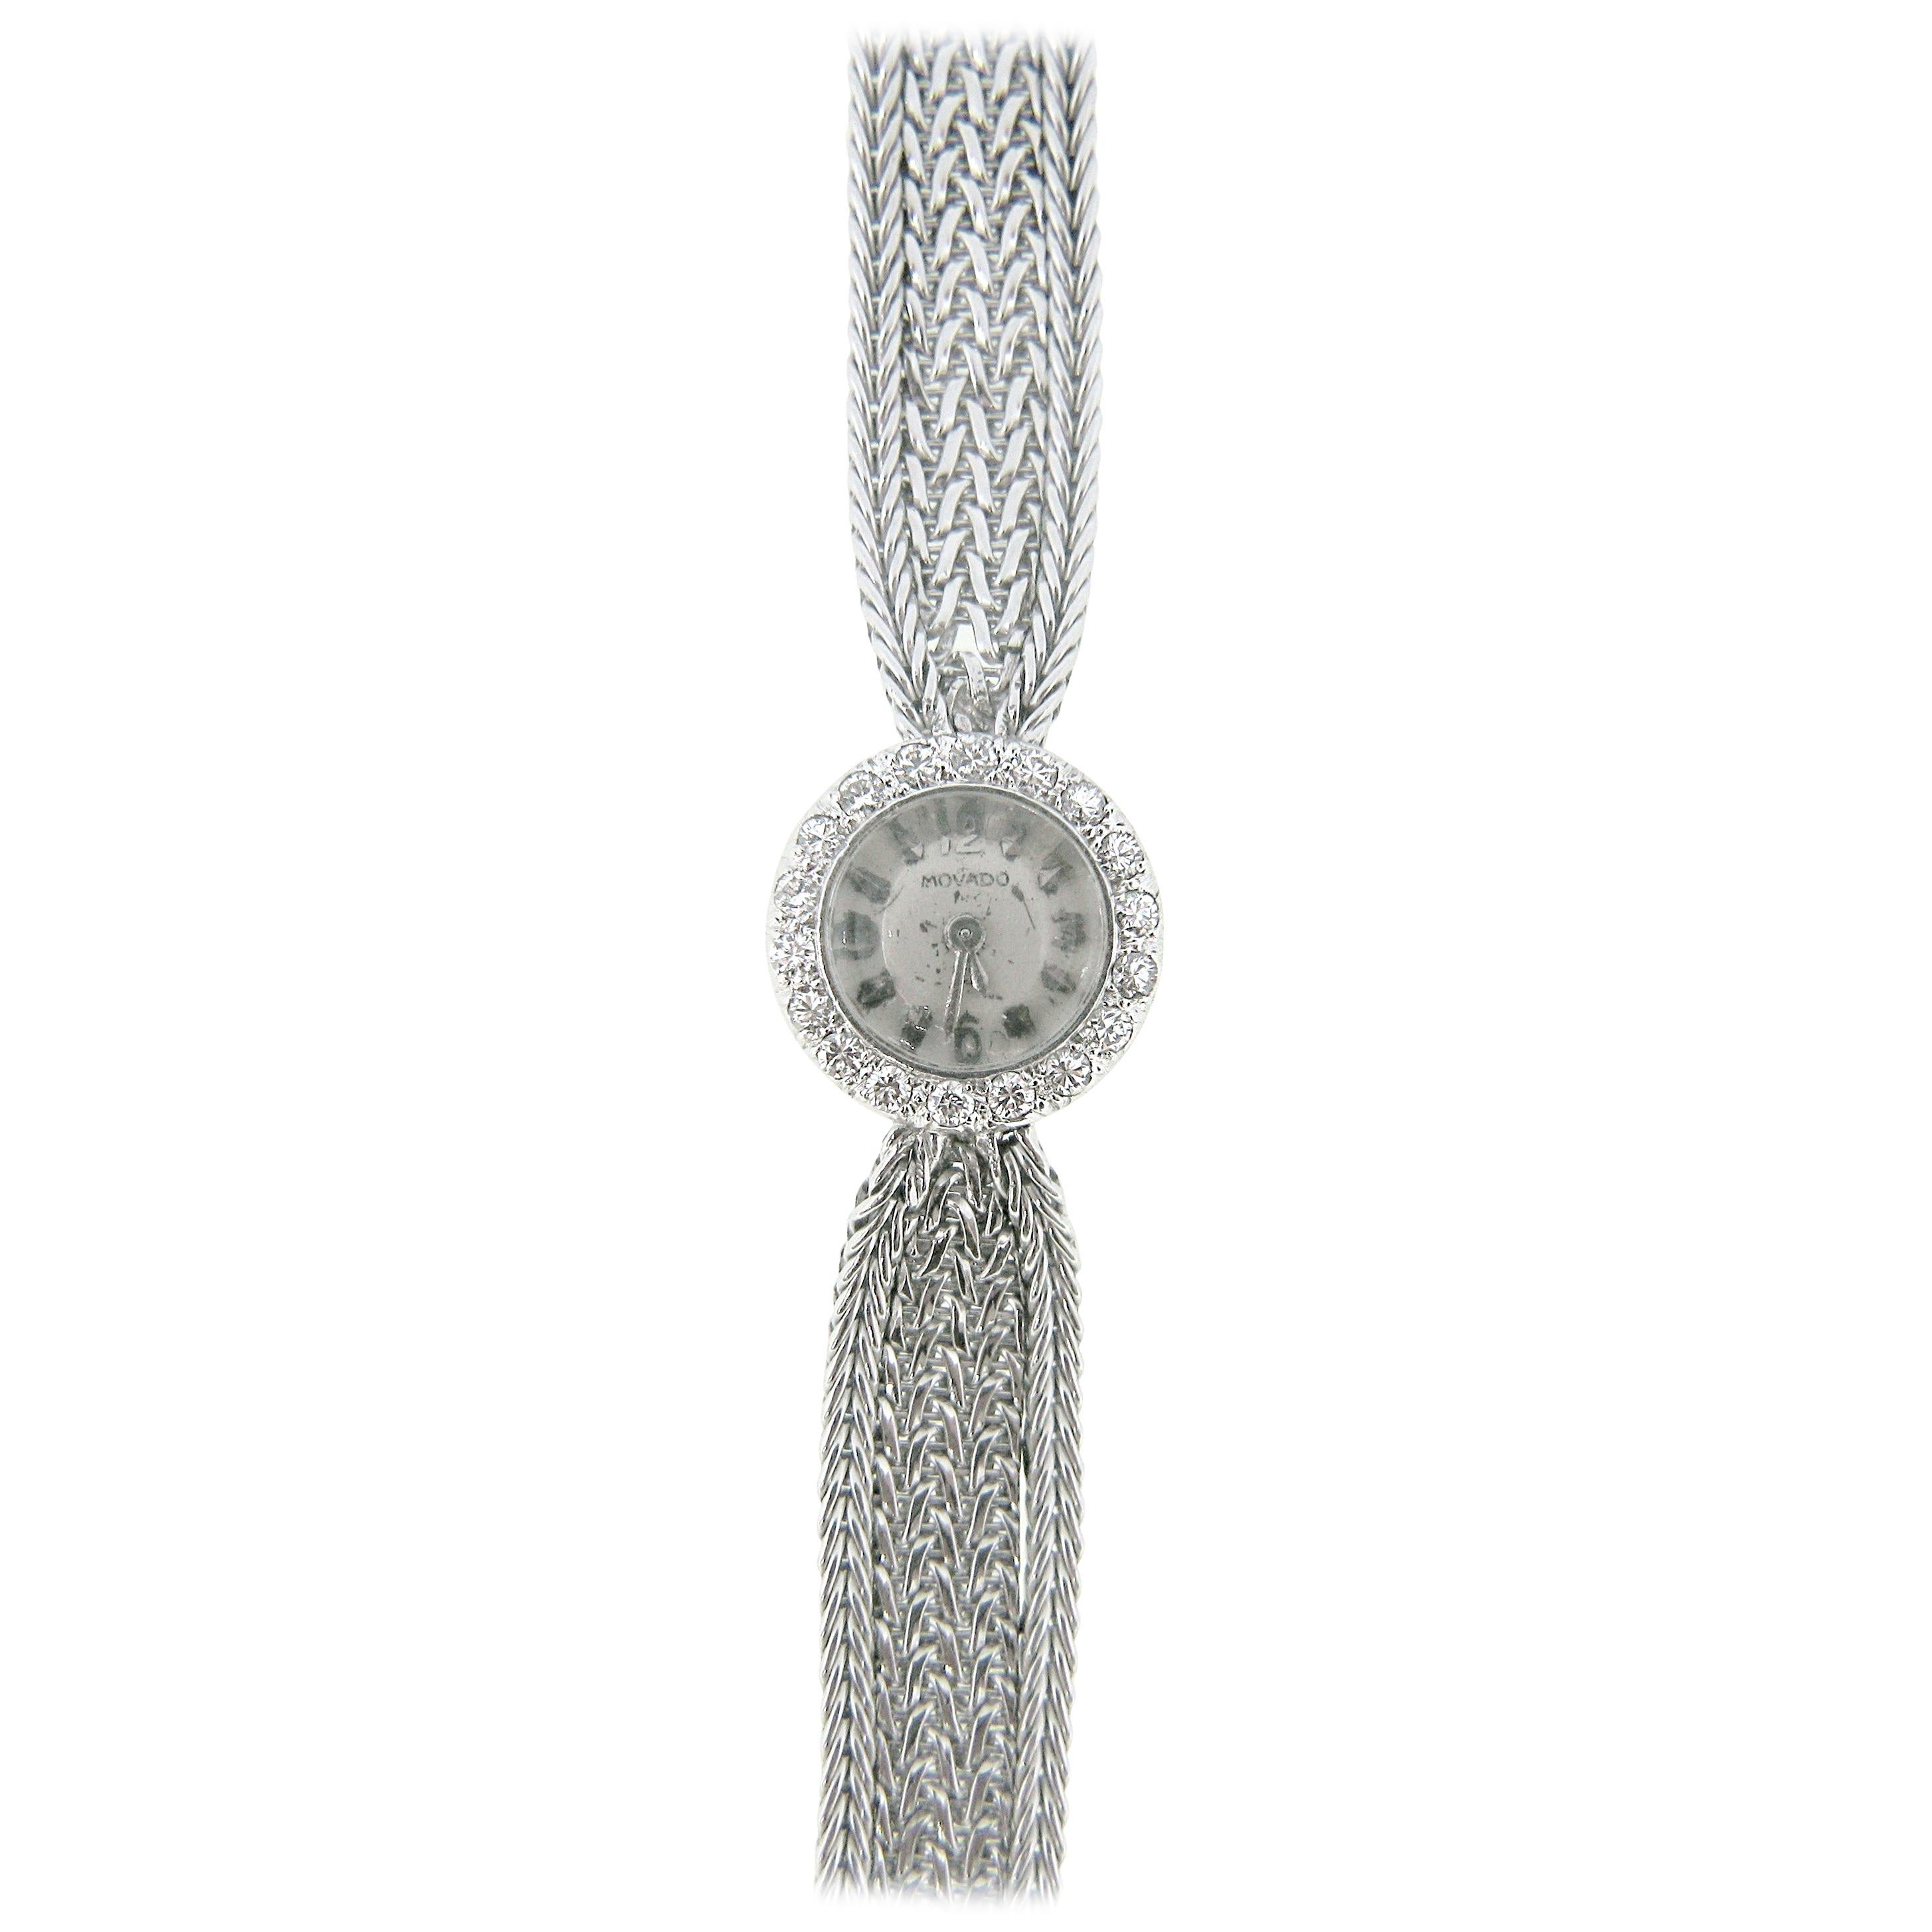 Vintage Movado Lady Diamonds Weißgold Armbanduhr mit Handaufzug